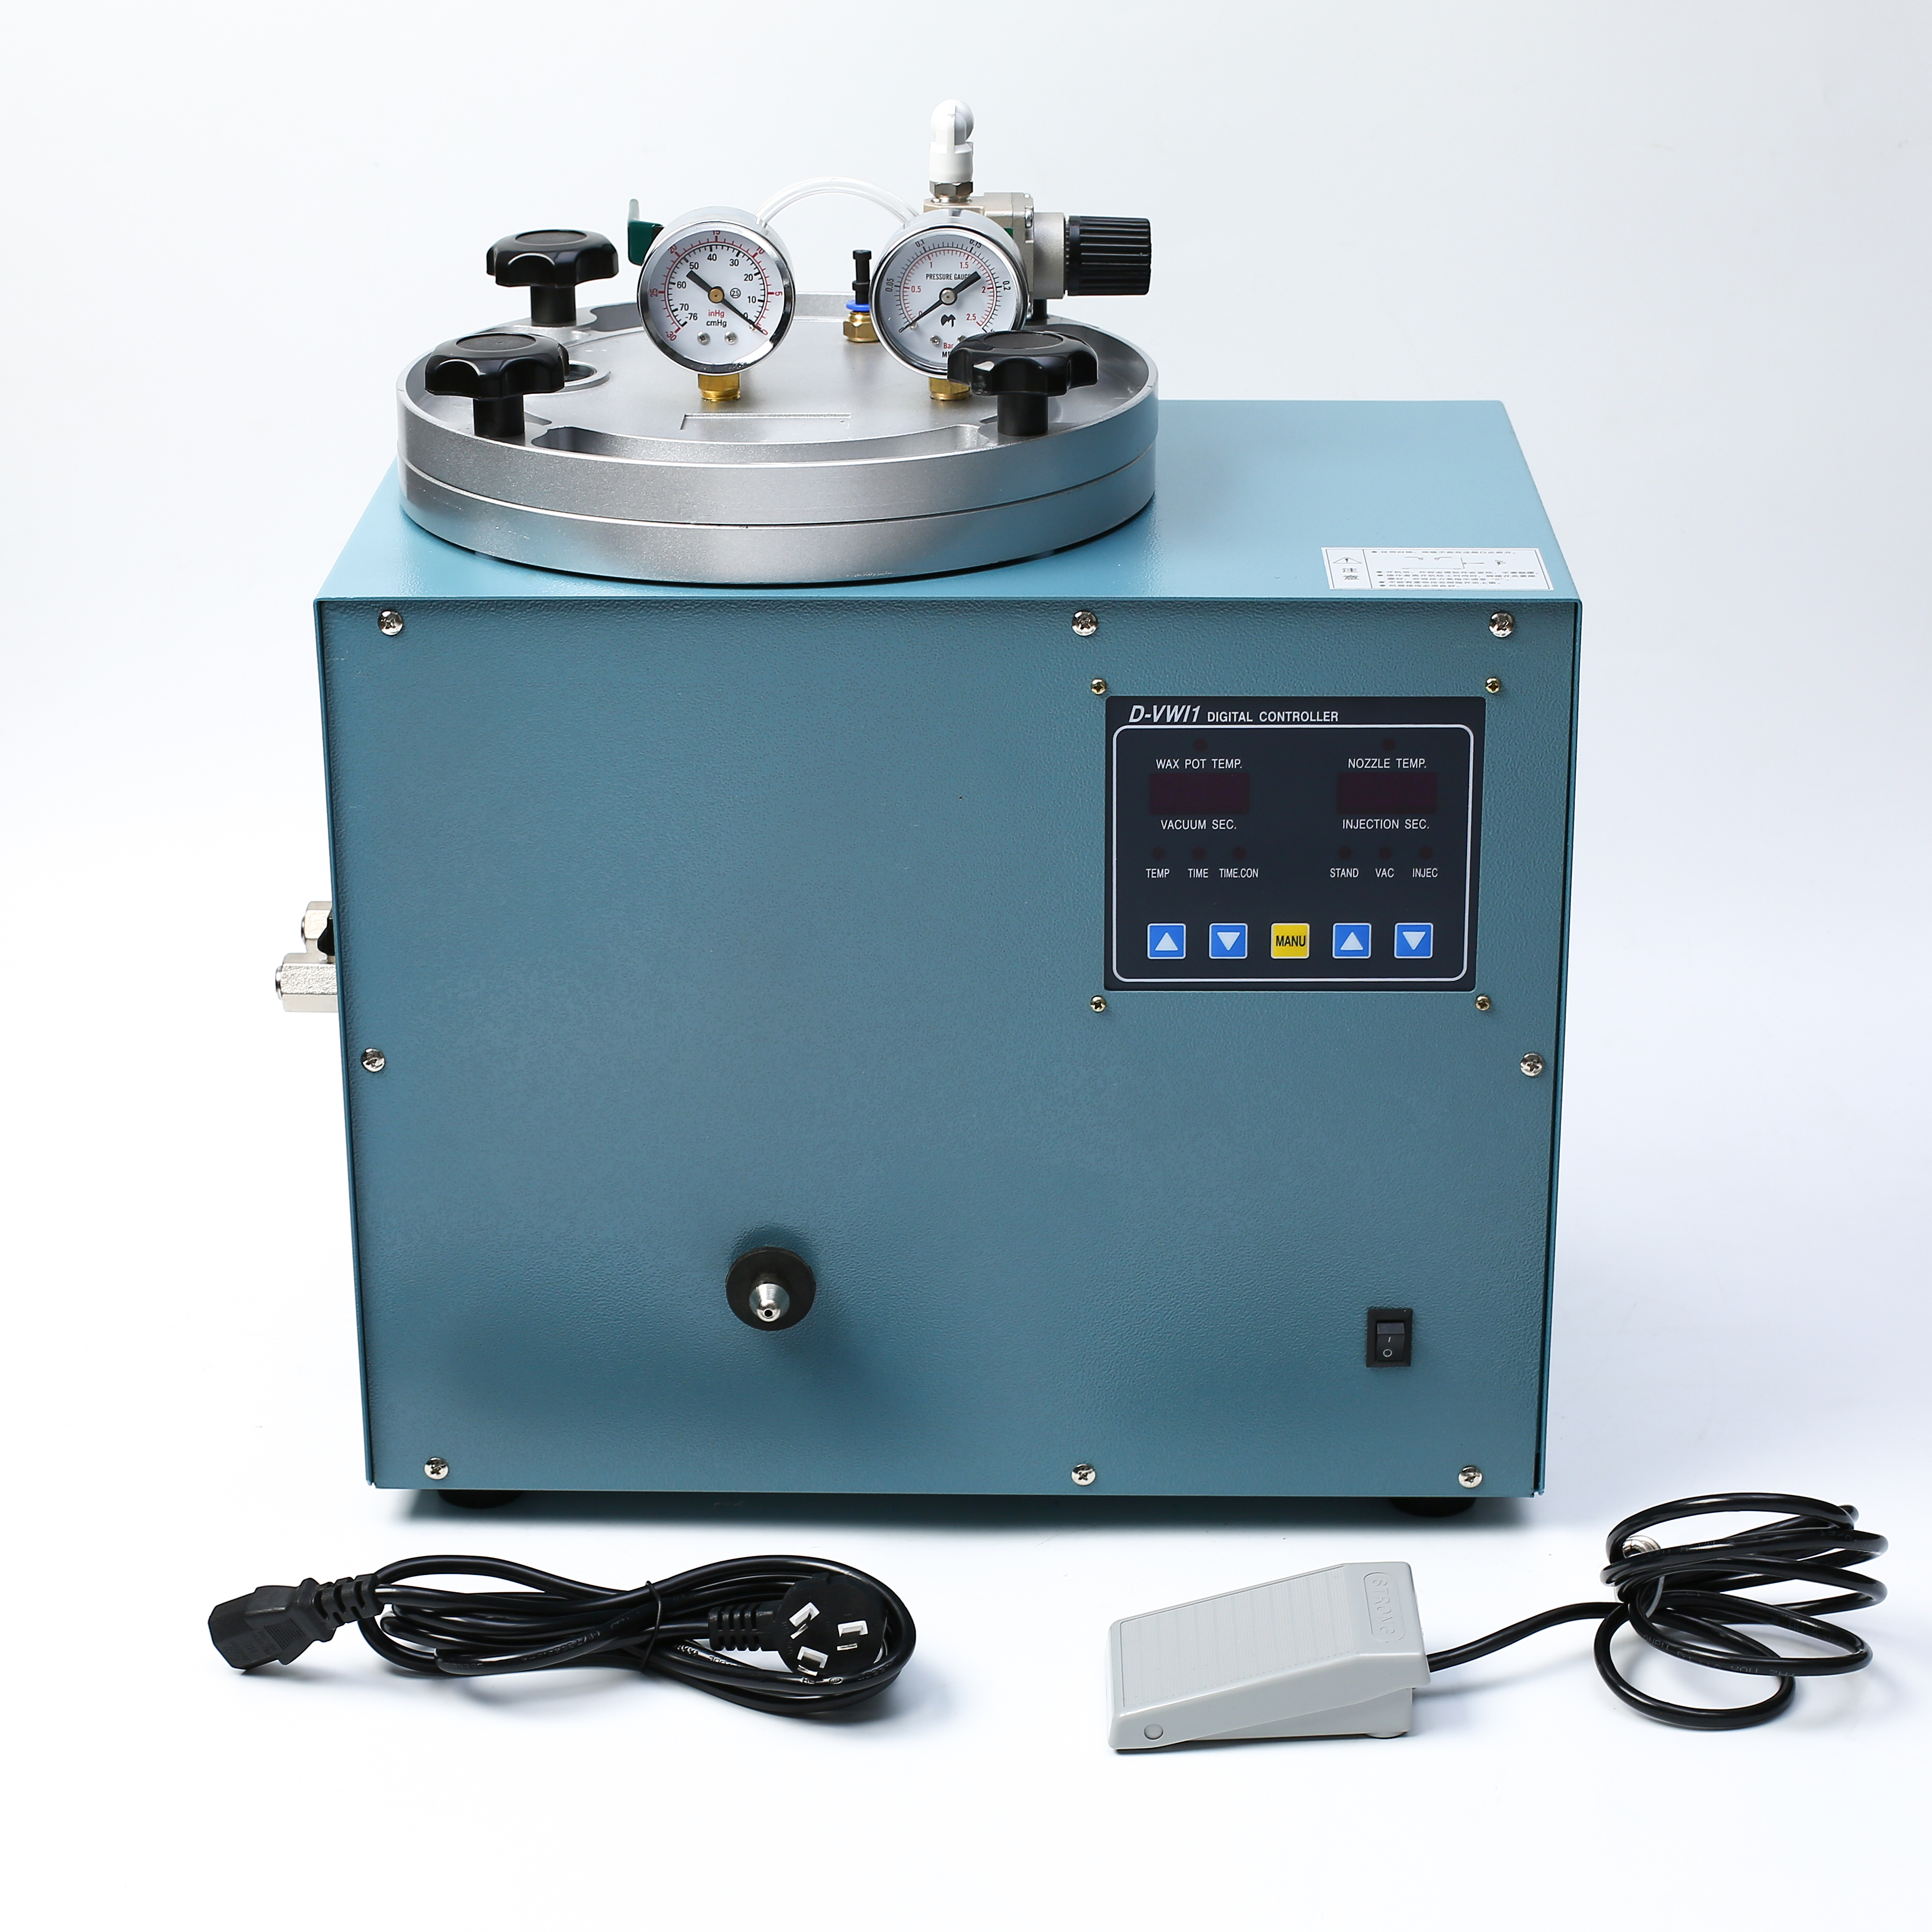 W-05 Digital vacuum wax injector